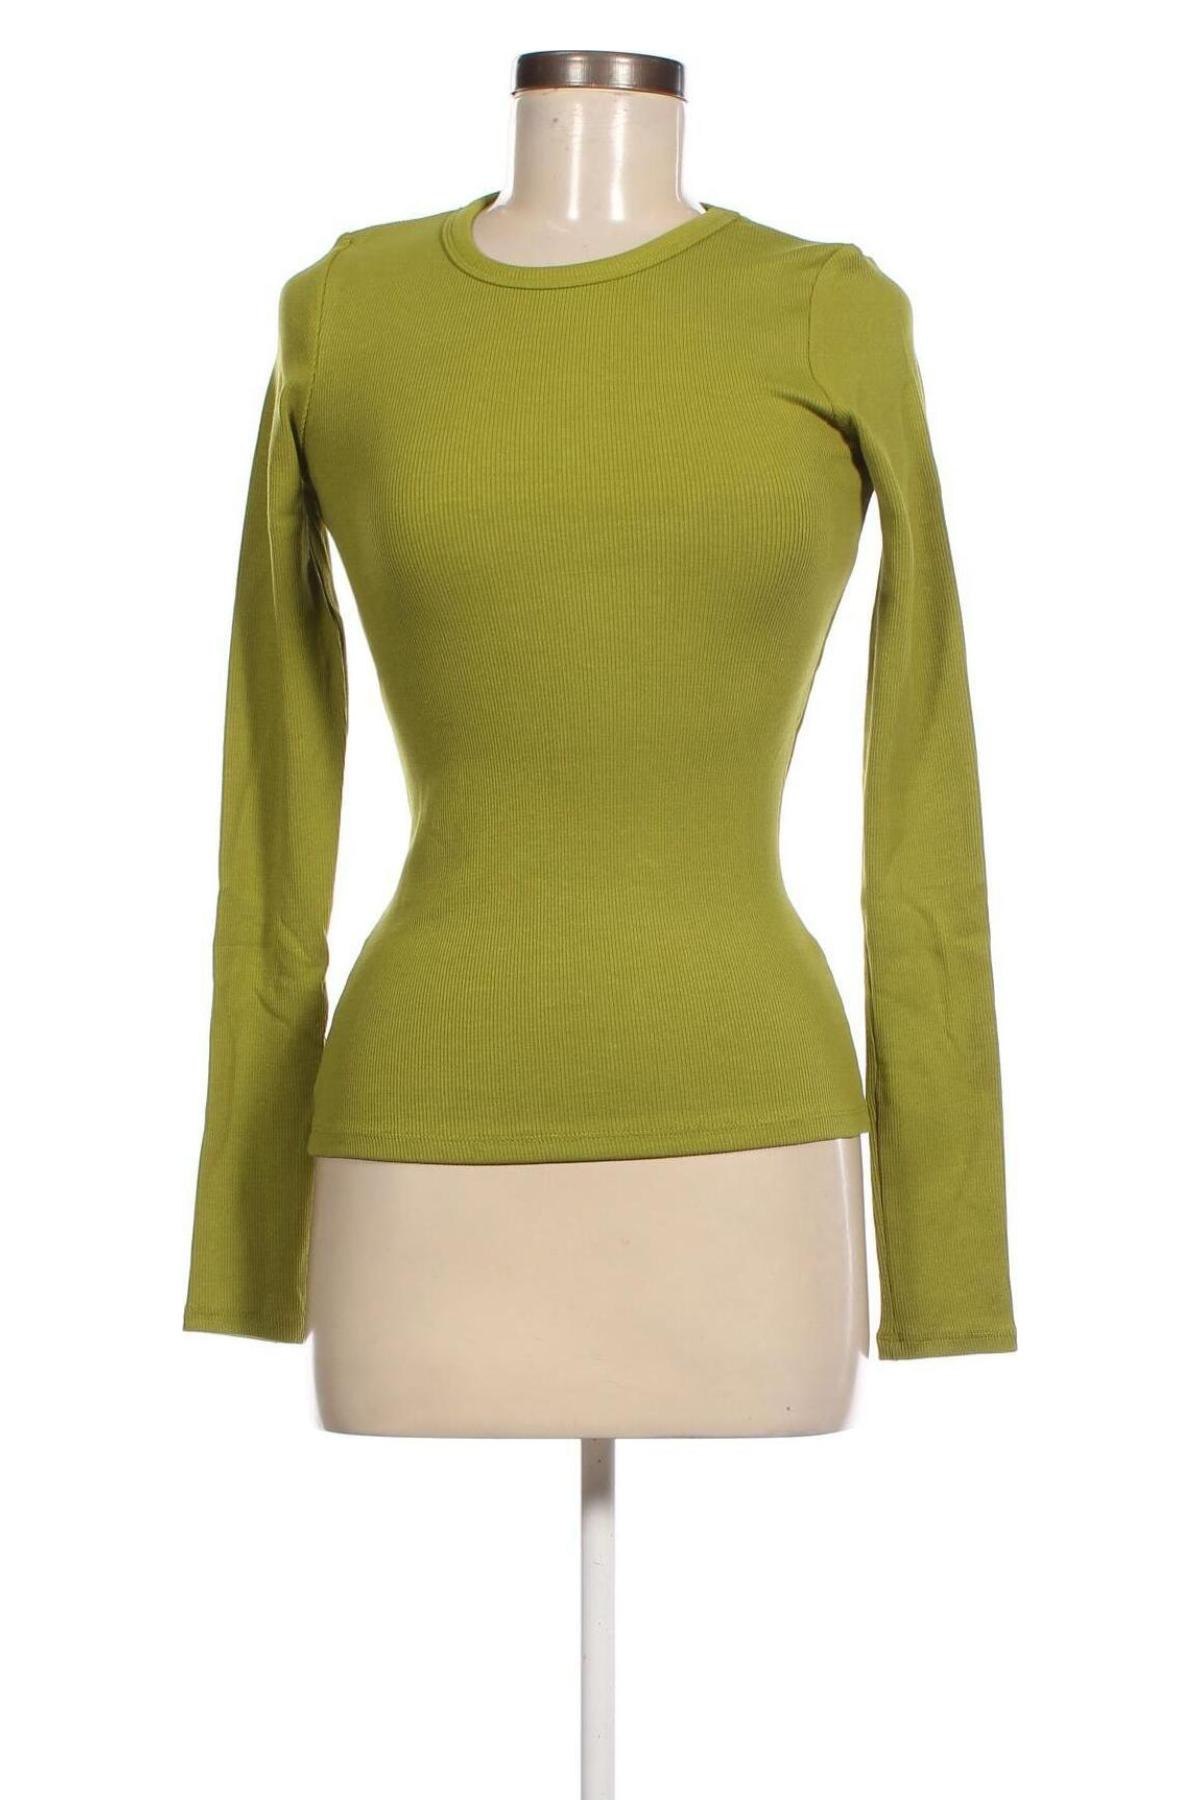 Damen Shirt JJXX, Größe S, Farbe Grün, Preis 19,85 €